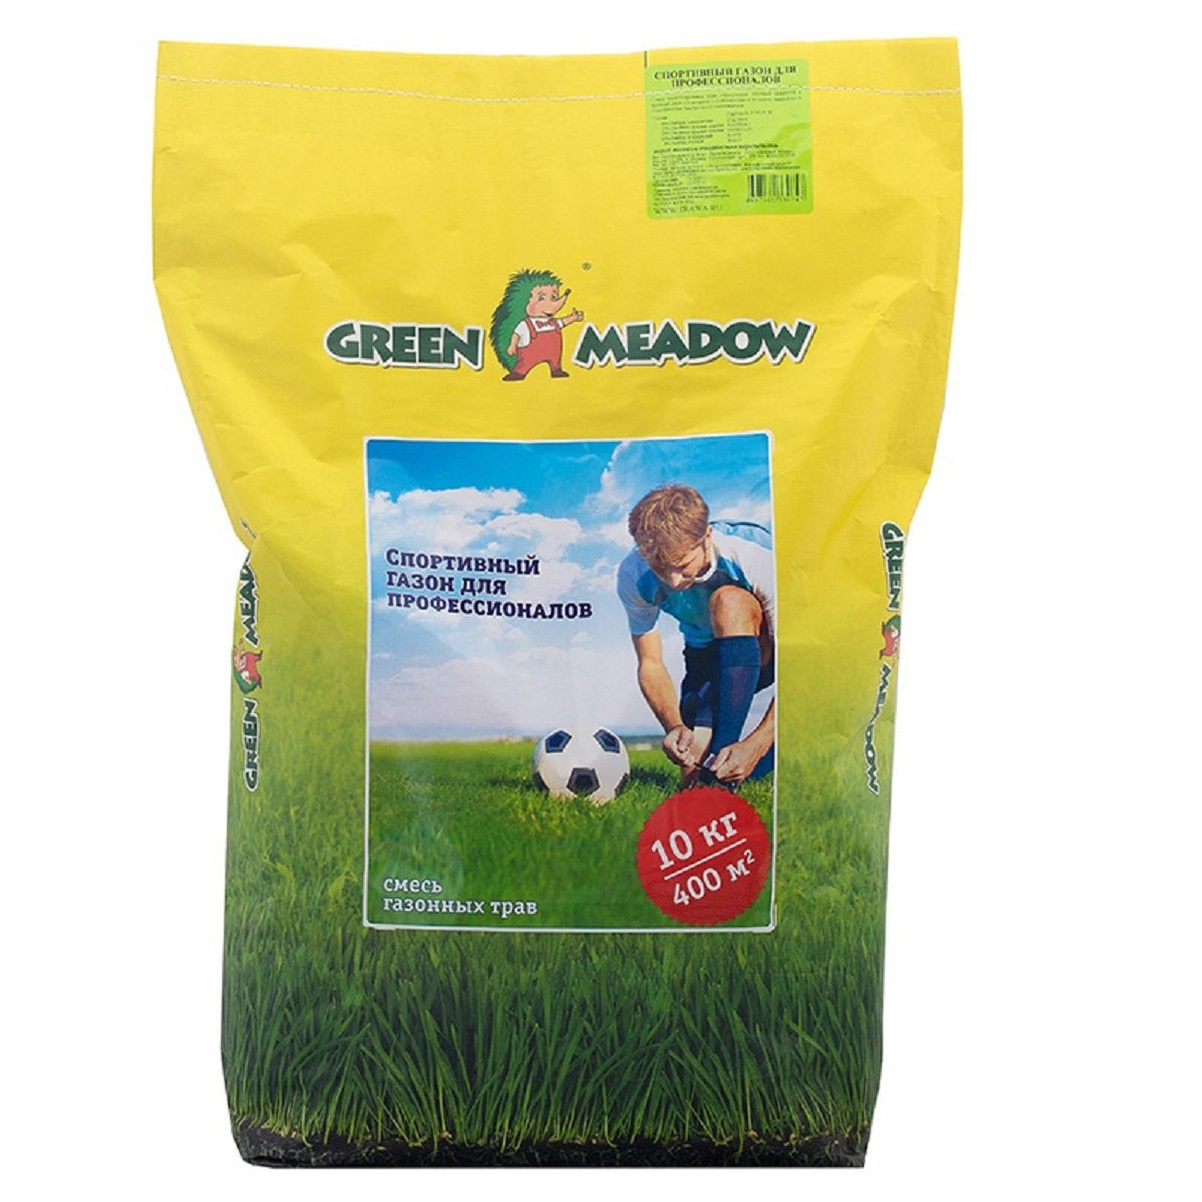 Газон Green Meadow спорт для профессионалов 10 кг газон green meadow детский парк мягкий 2 кг